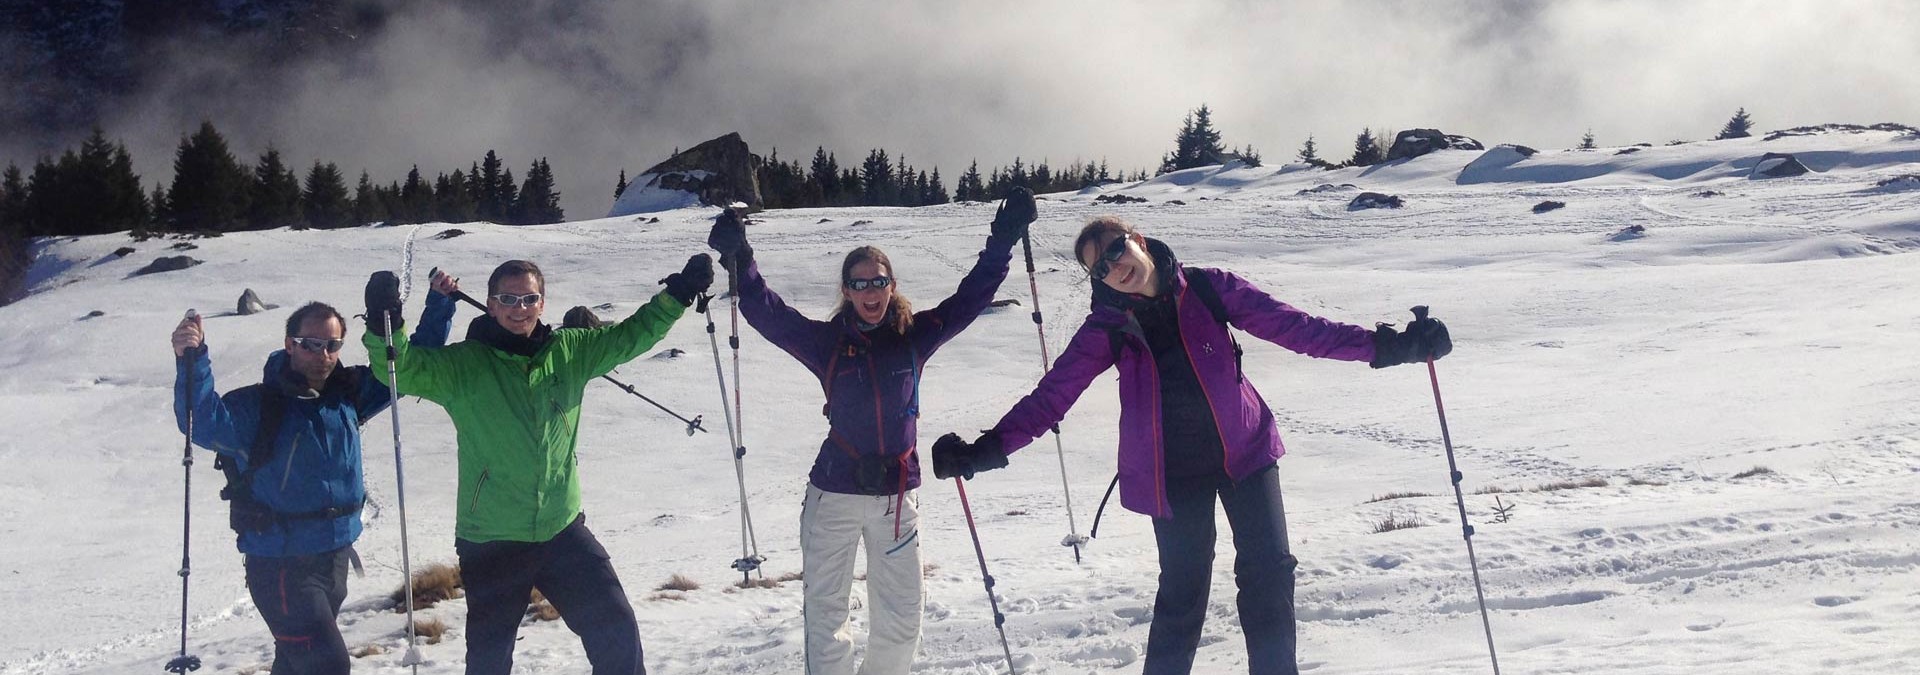 Chamonix Snowshoe Adventure - sunshine, snow and mountains